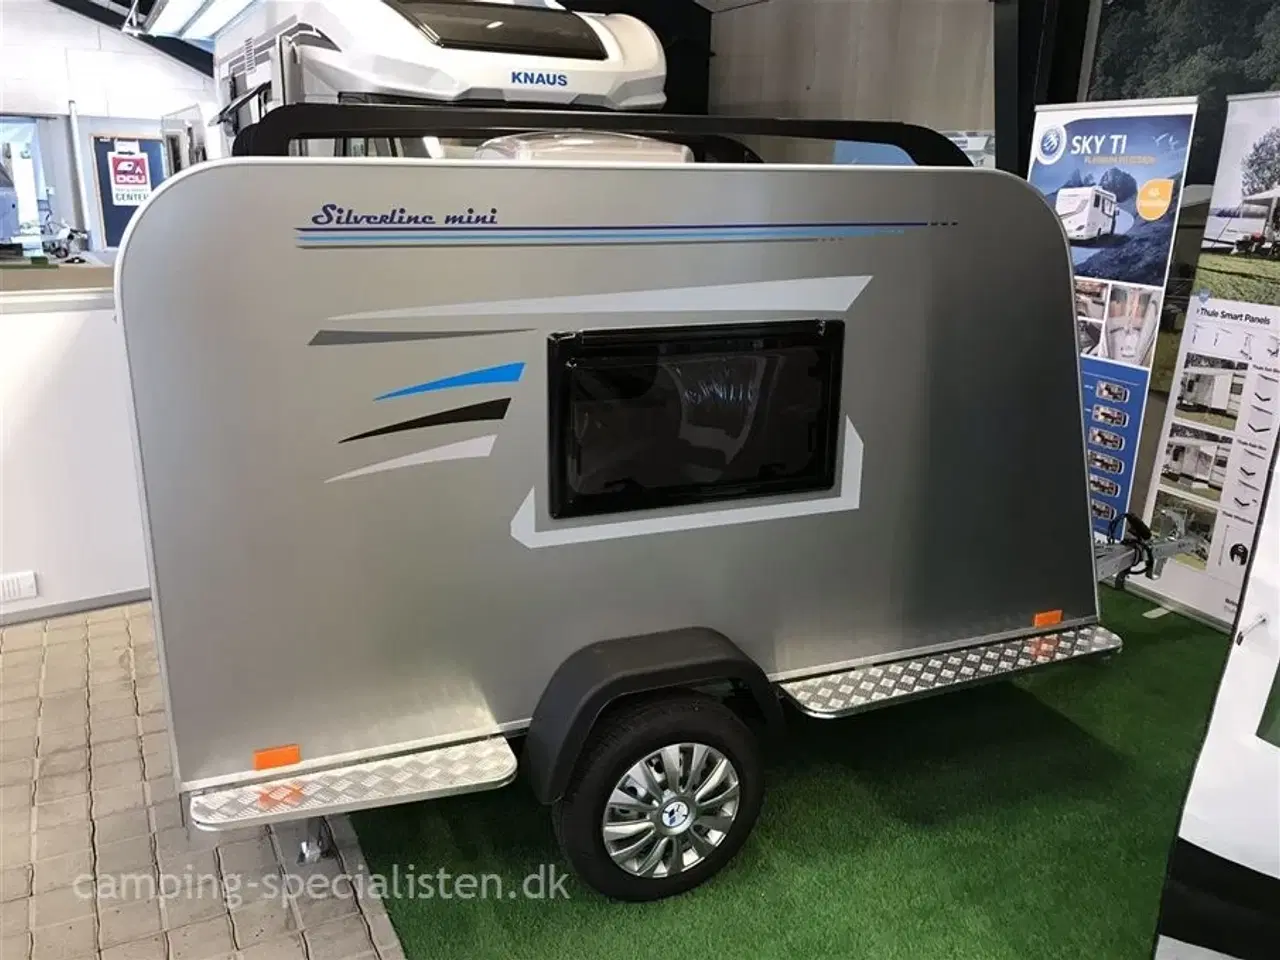 Billede 5 - 2024 - Tomplan Silverline Mini    NY Mini campingvogn Den populære Silverline i model 2024 -  Camping-Specialisten.dk